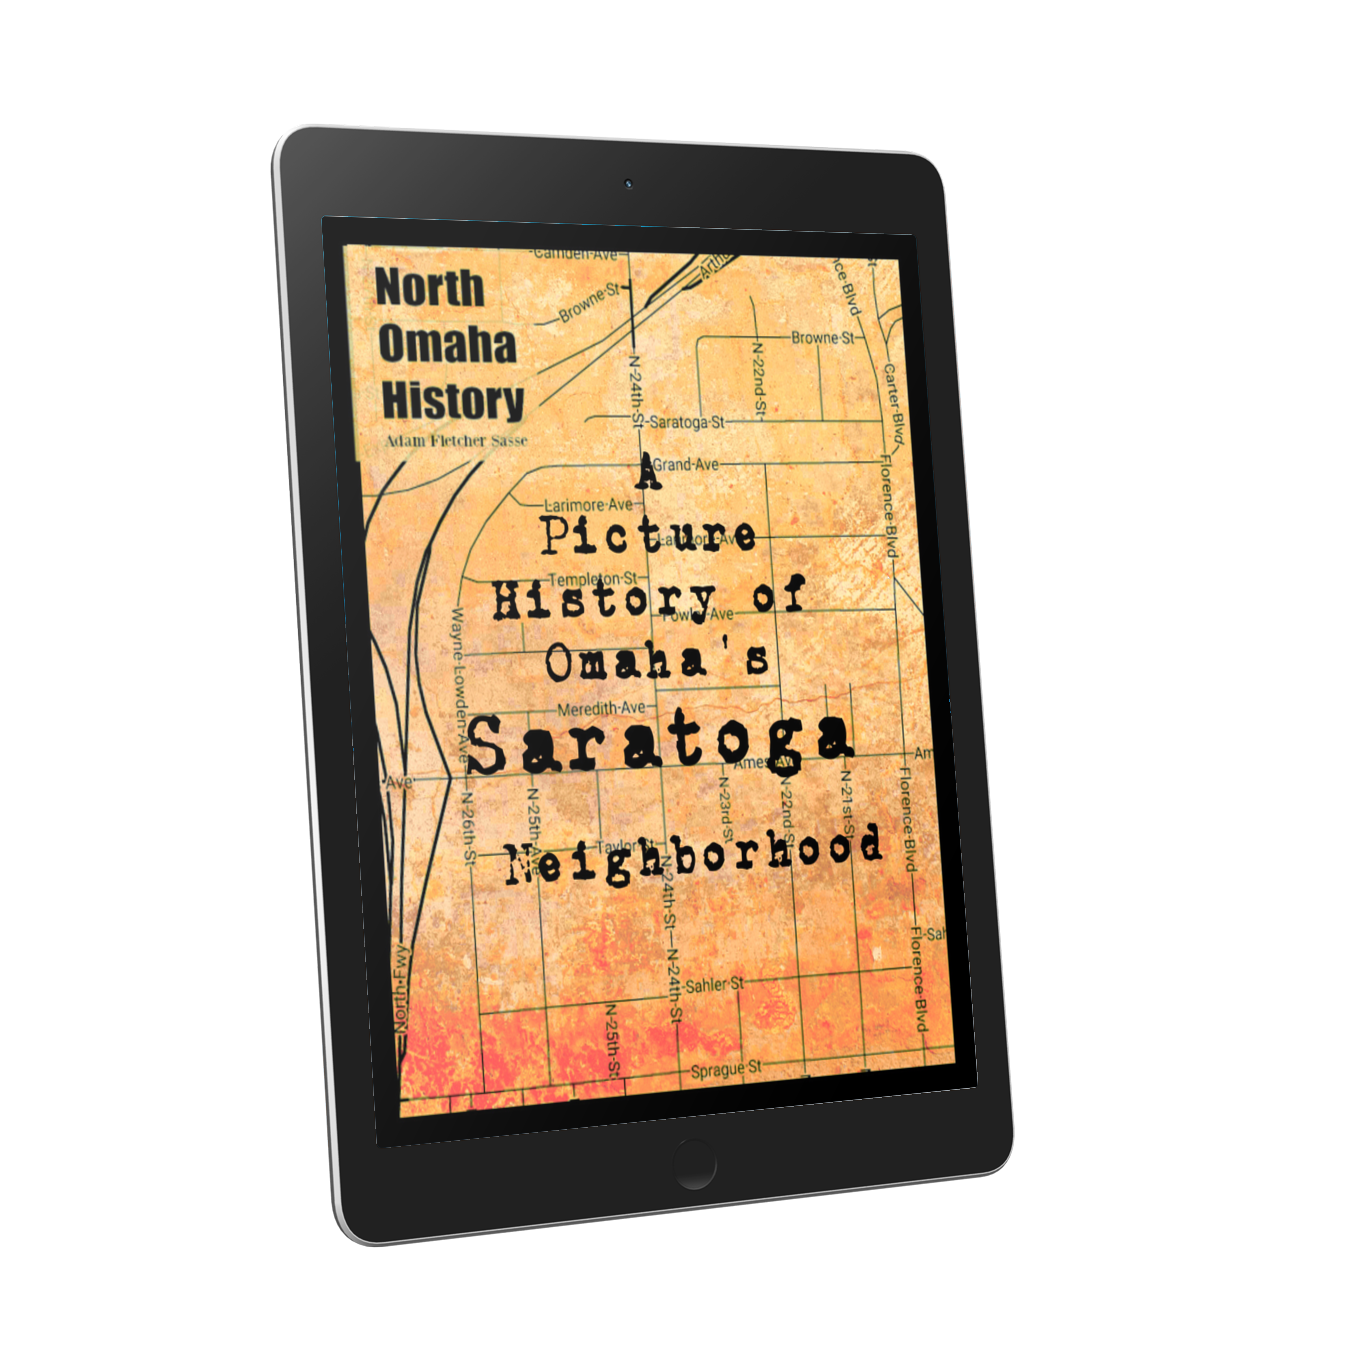 A Picture History of Omaha's Saratoga Neighborhood by Adam Fletcher Sasse for NorthOmahaHistory.com